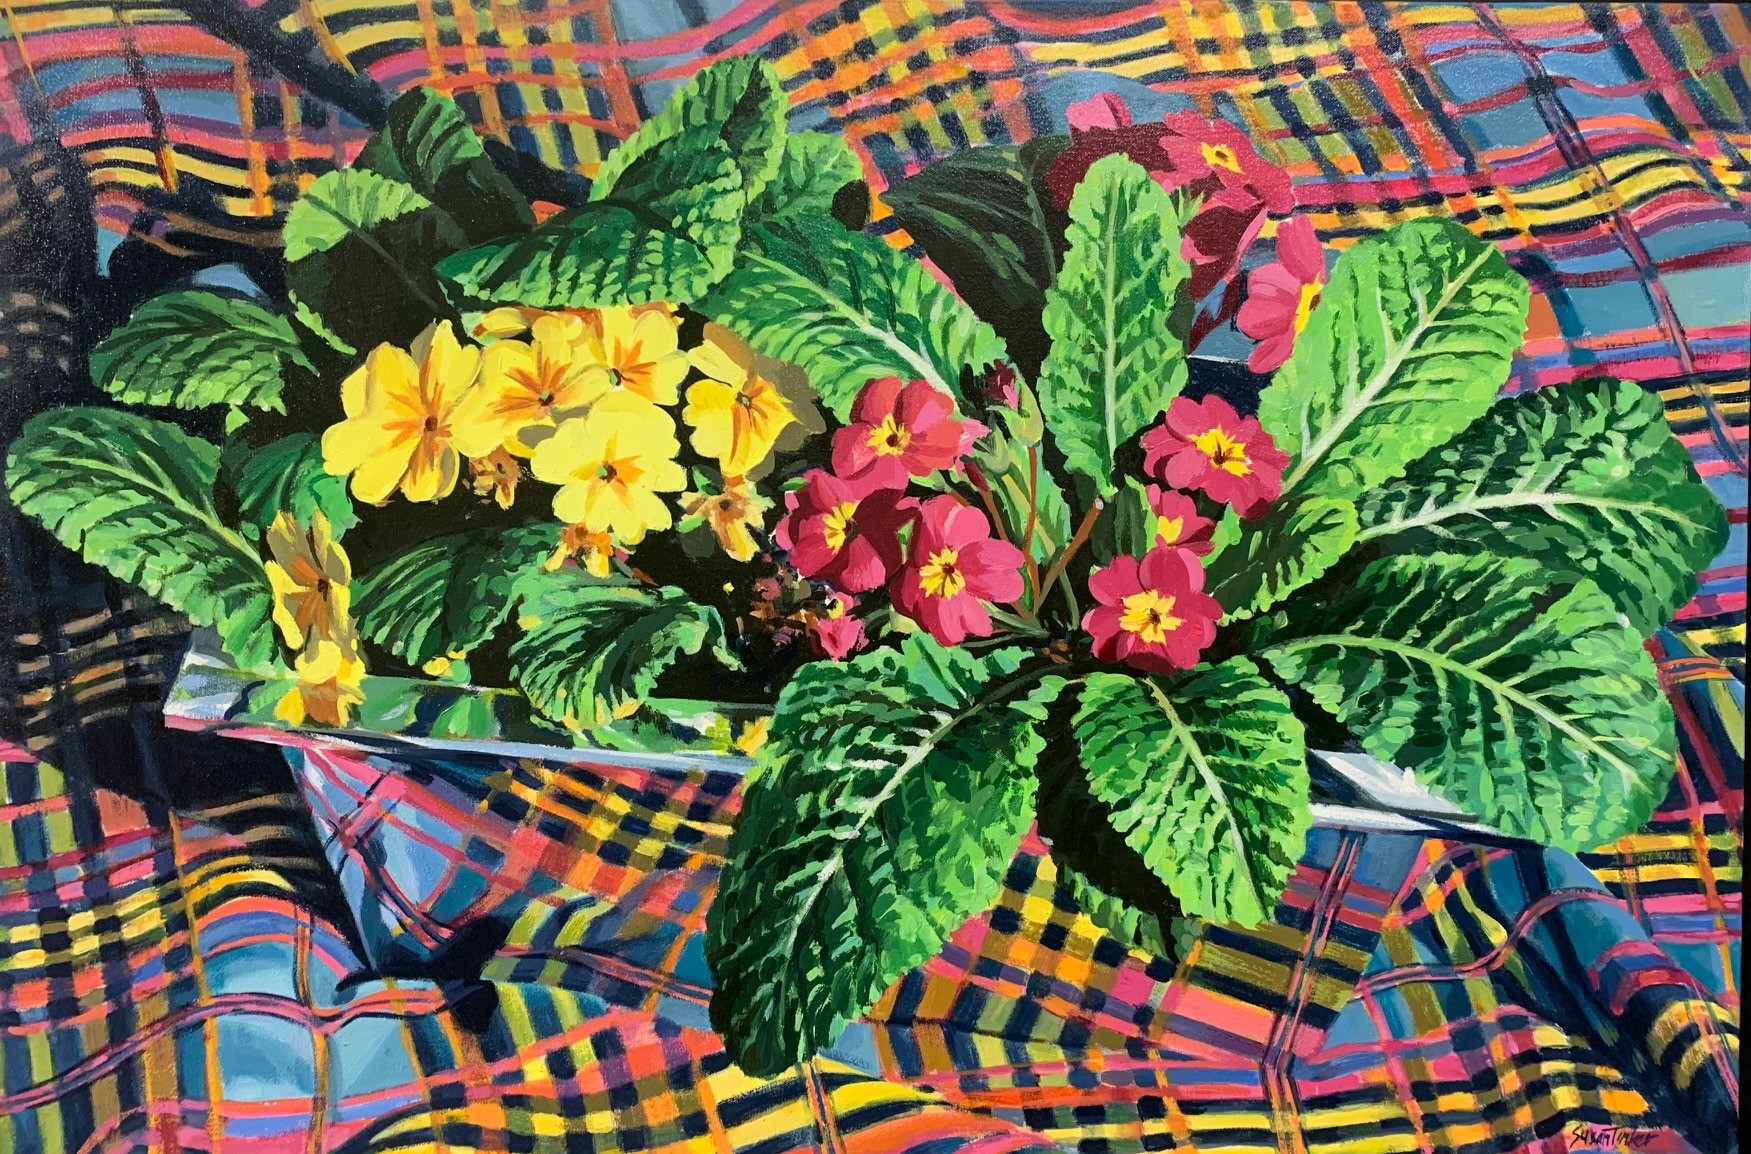 Susan Tinker, “Plaid Primrose”, oil on canvas